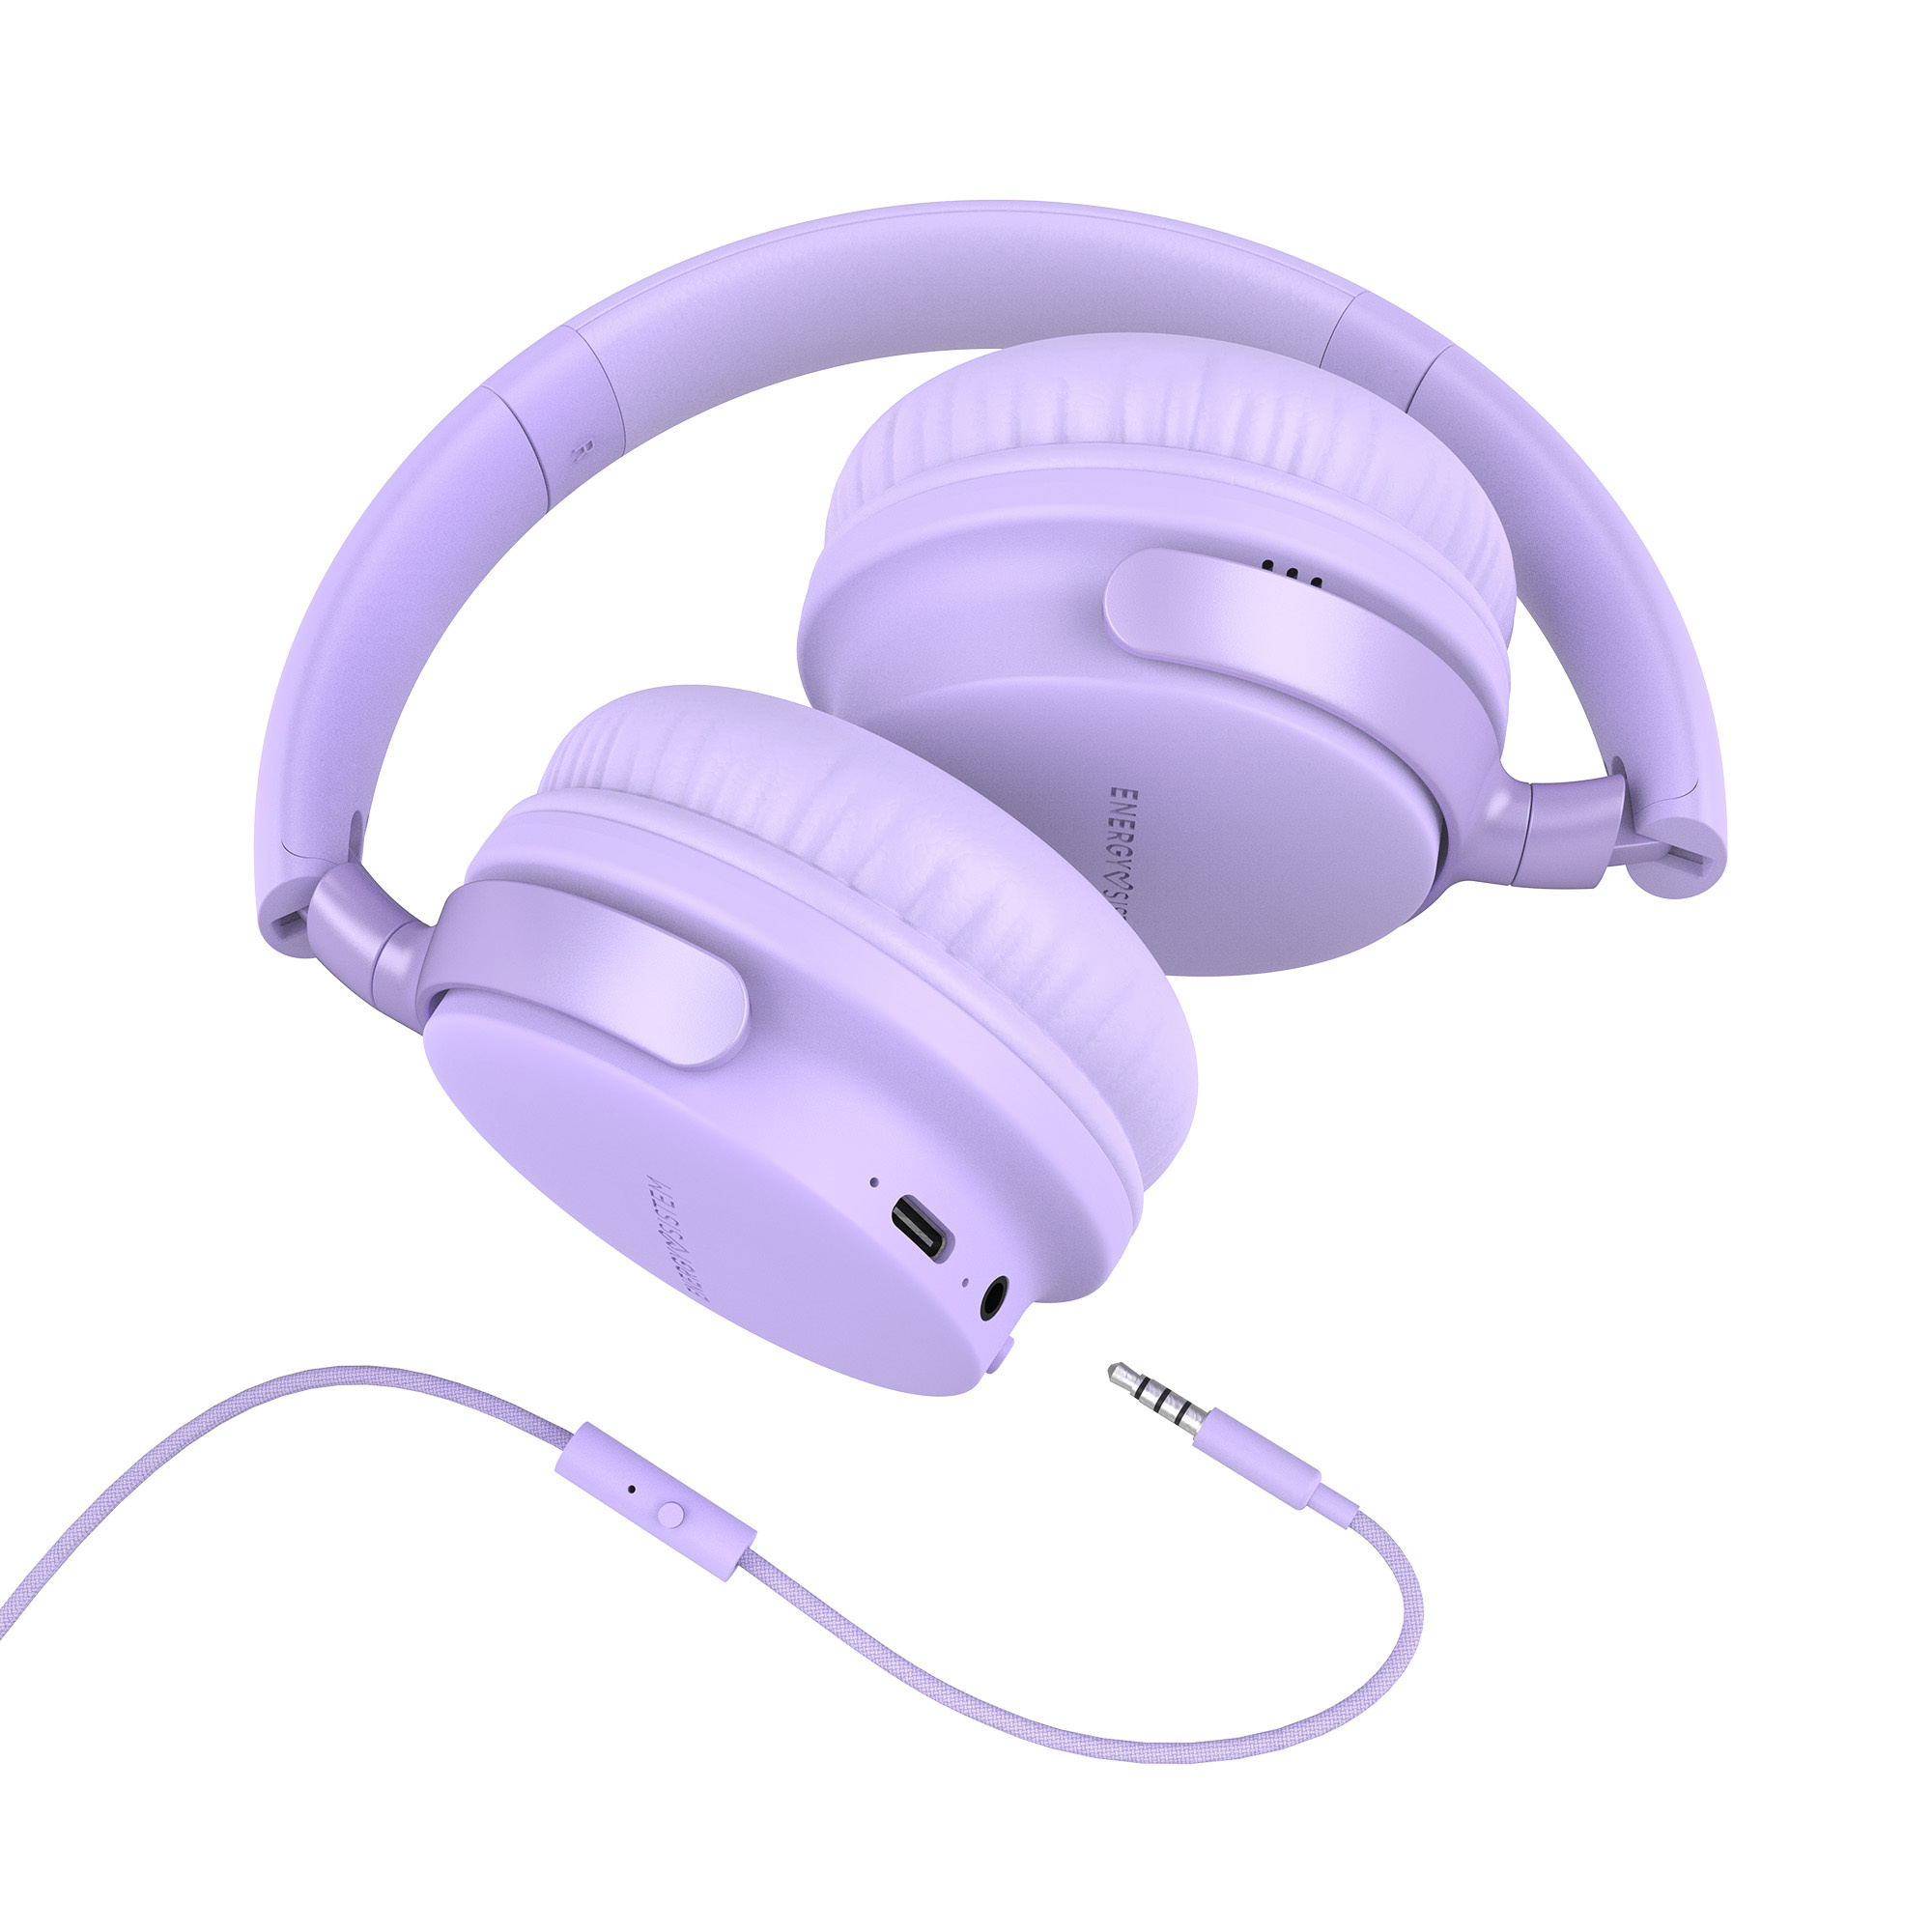 Foldable wireless headphones with extensible headband